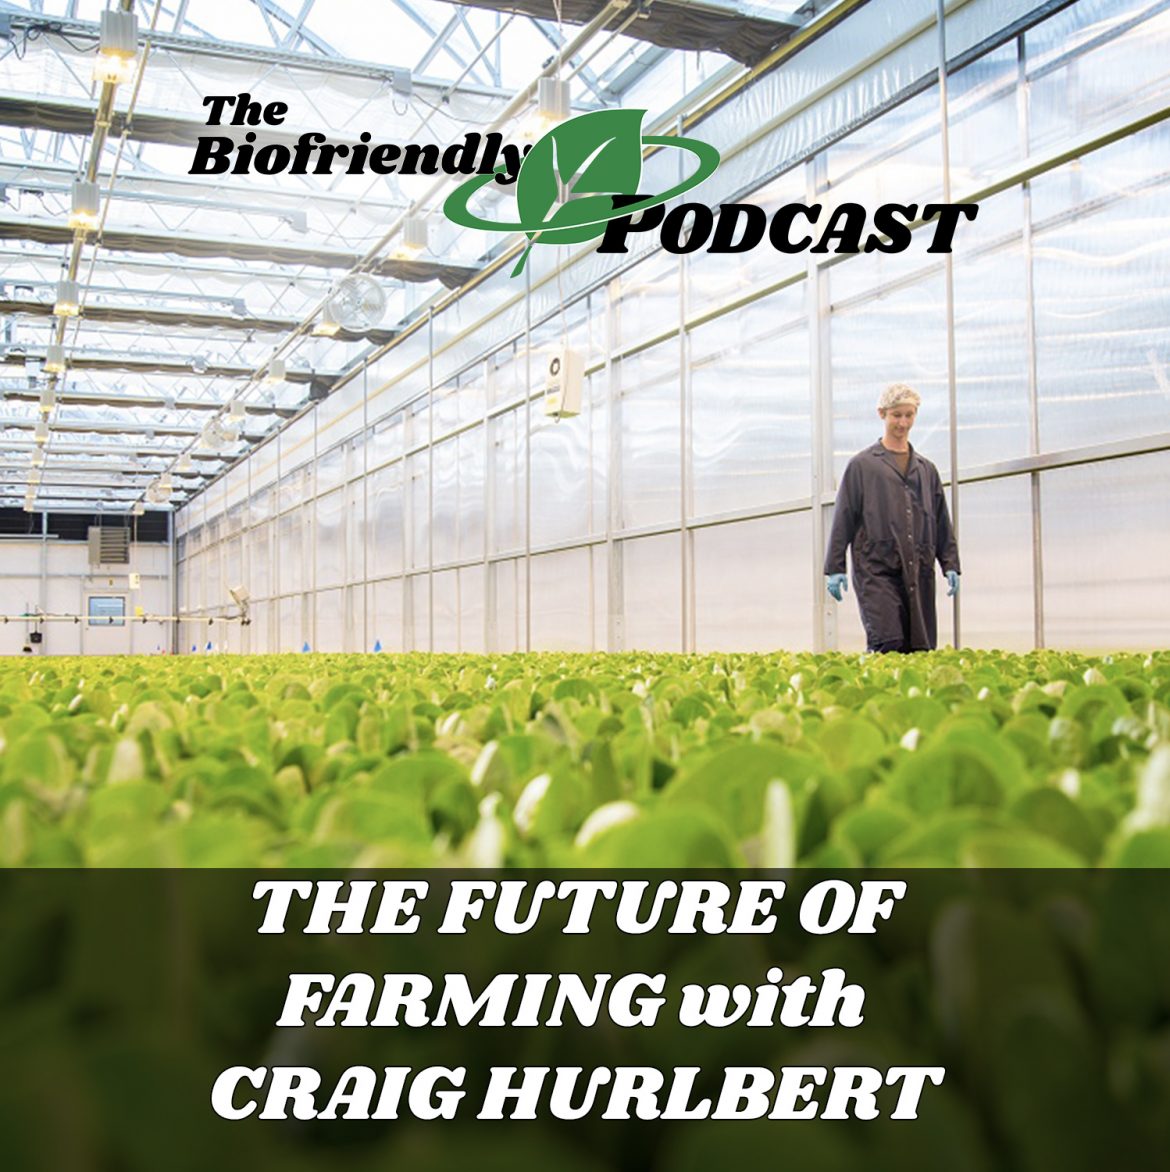 The Future of Farming with Craig Hurlbert